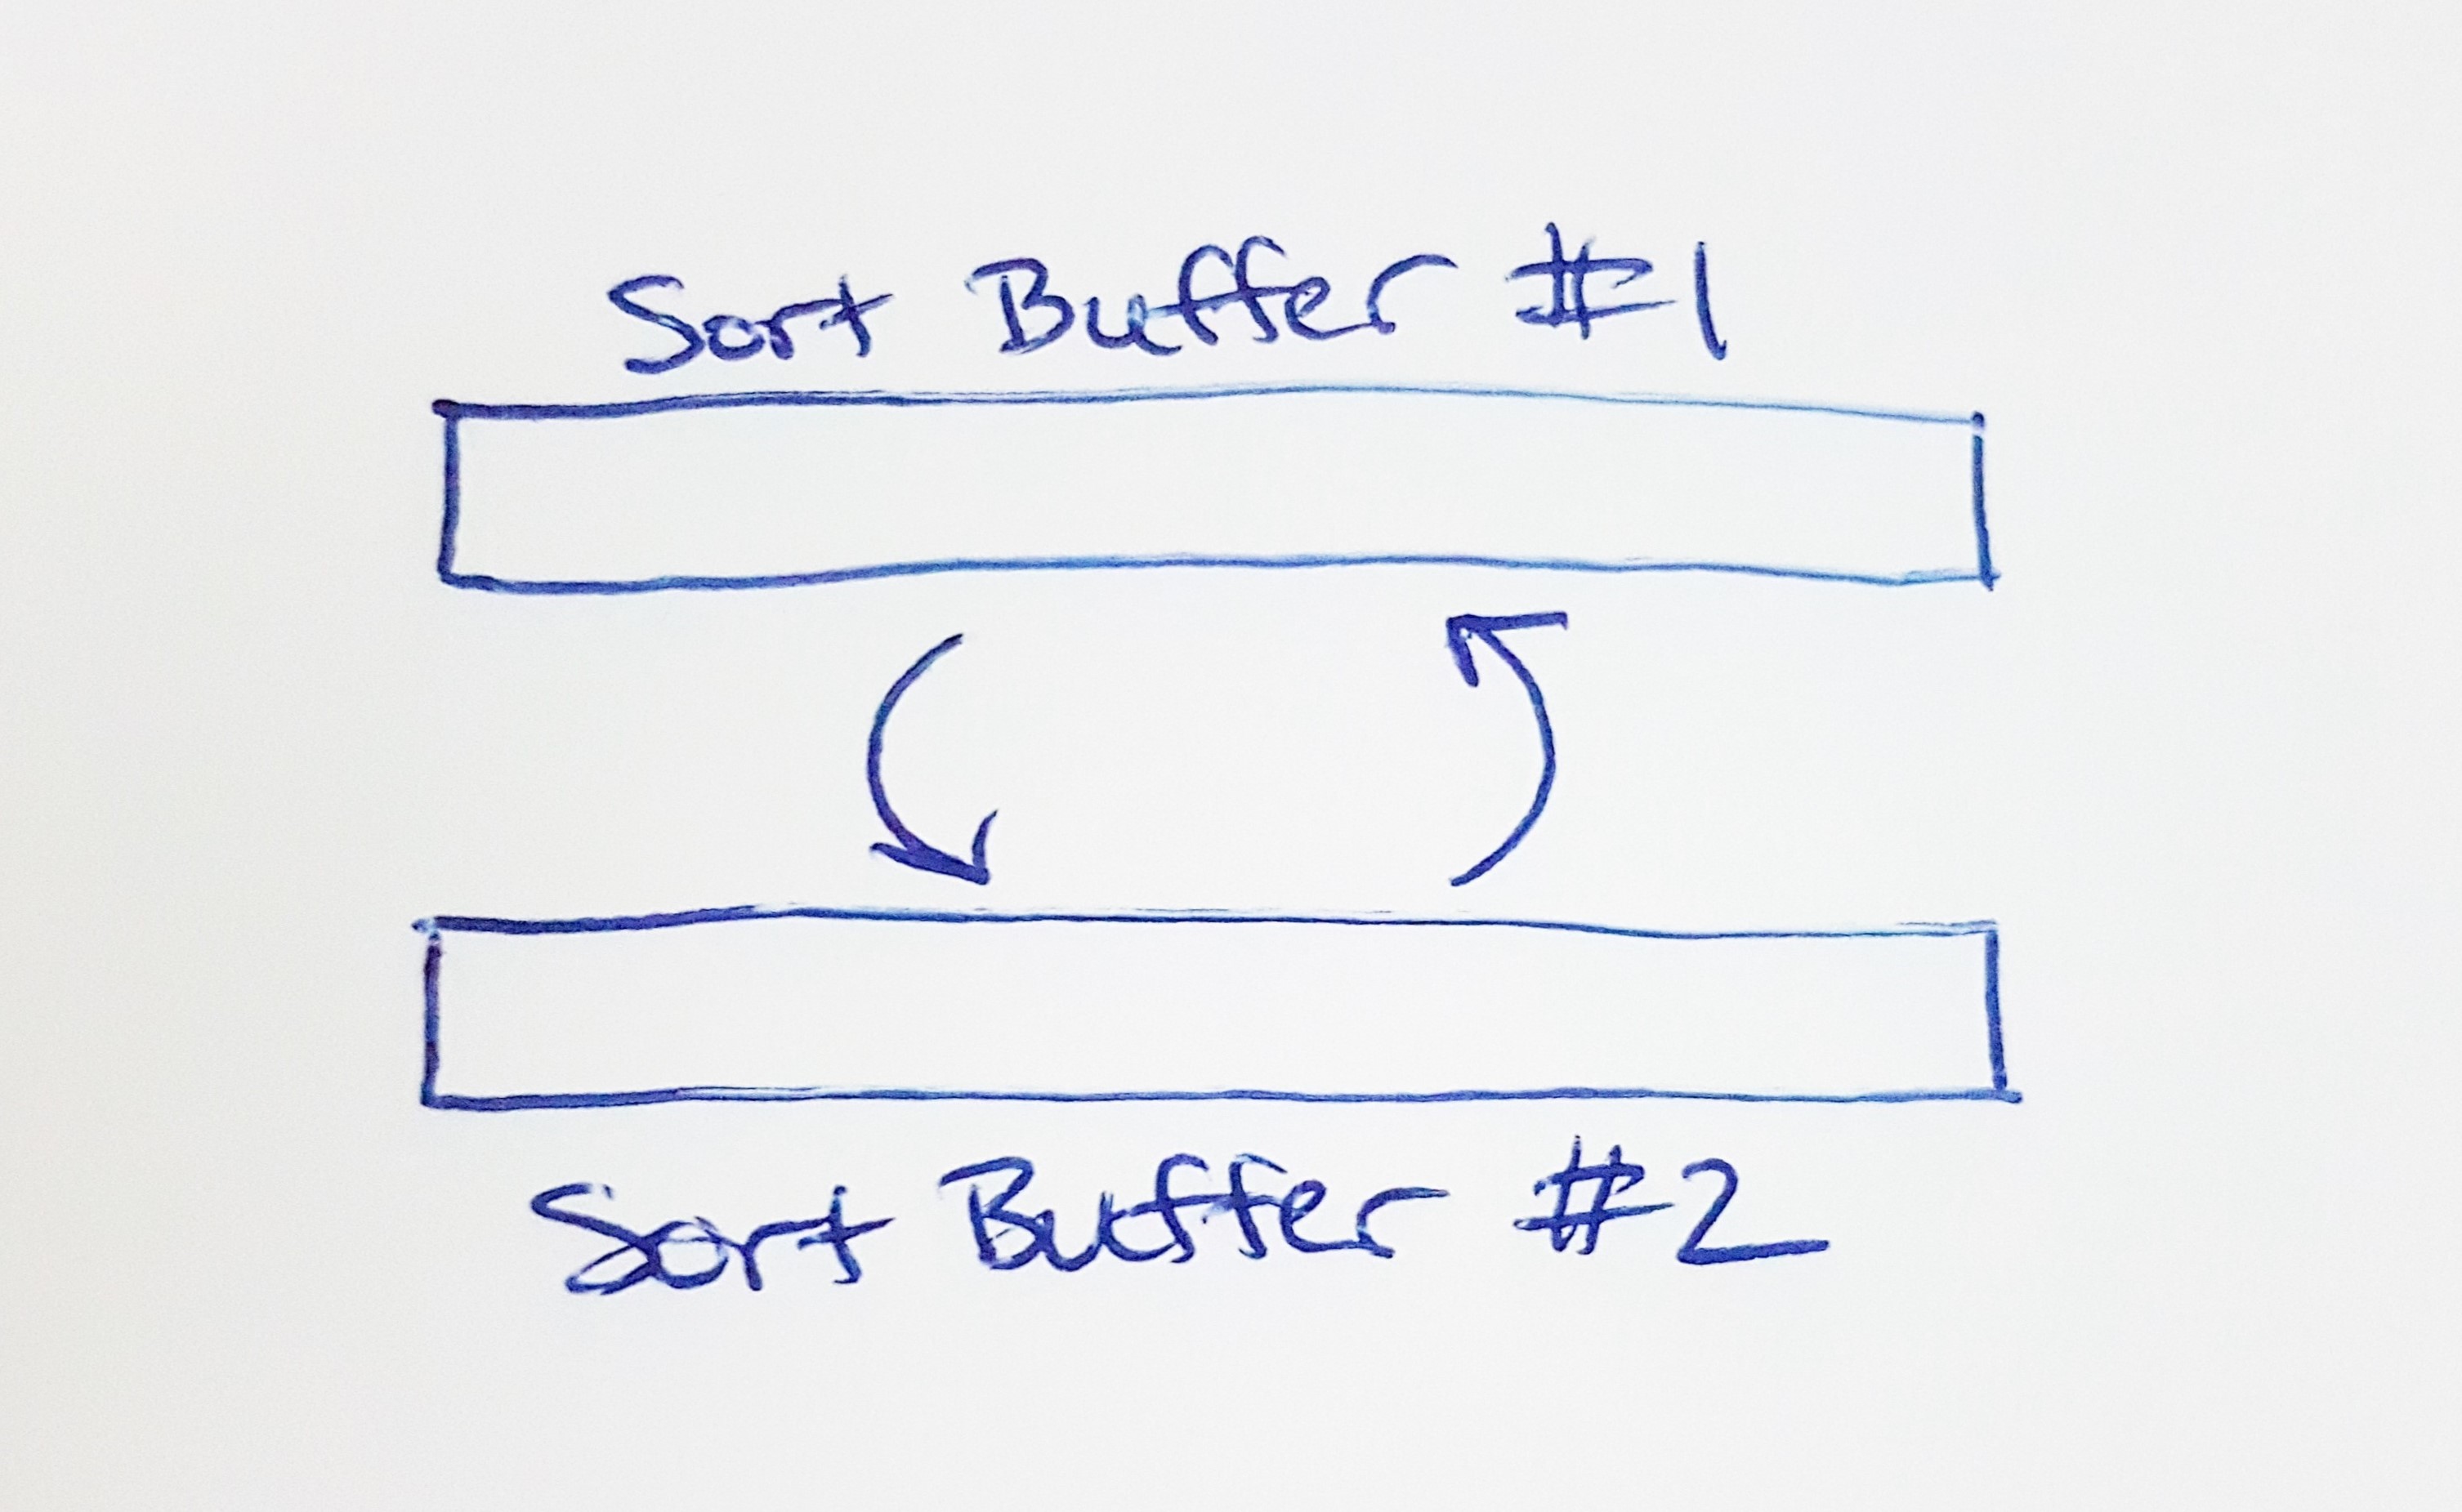 Double buffer hand drawn diagram